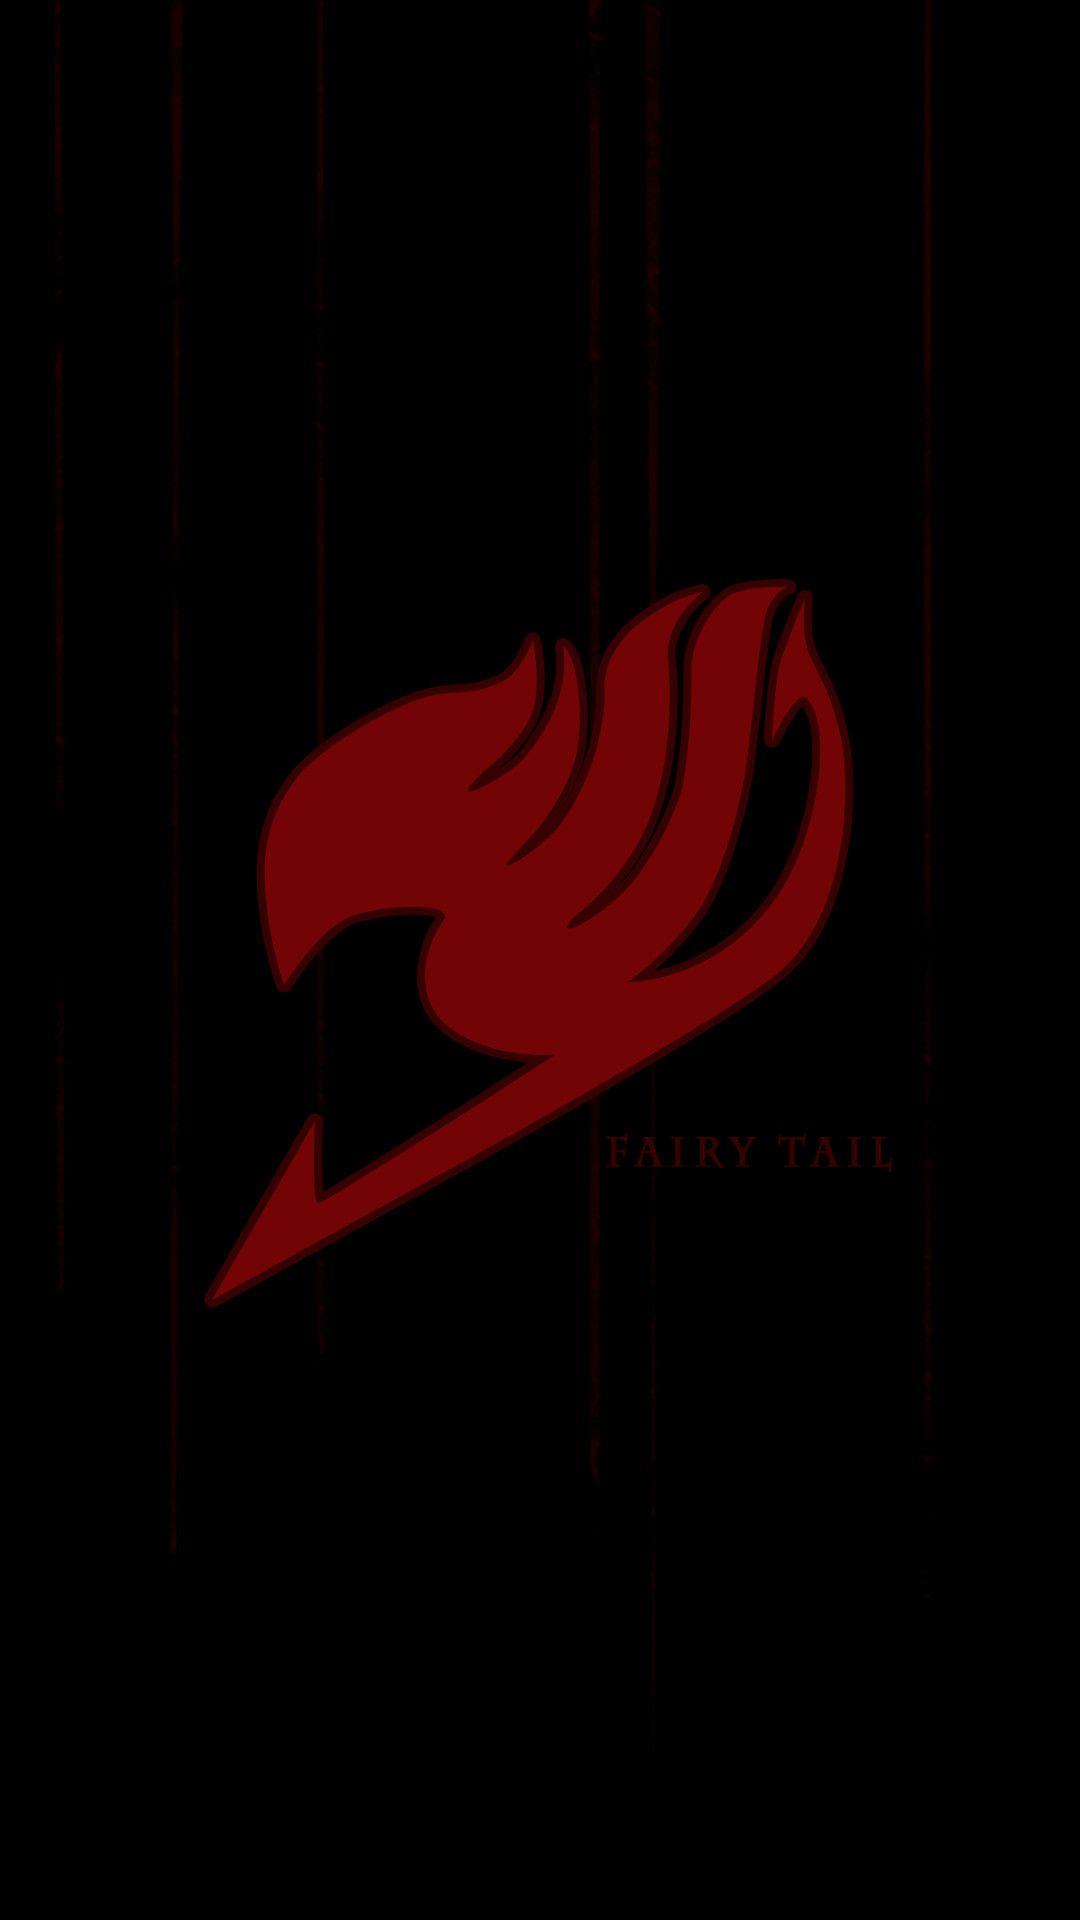 Fairy Tail Logo Wallpaper Free HD Wallpaper